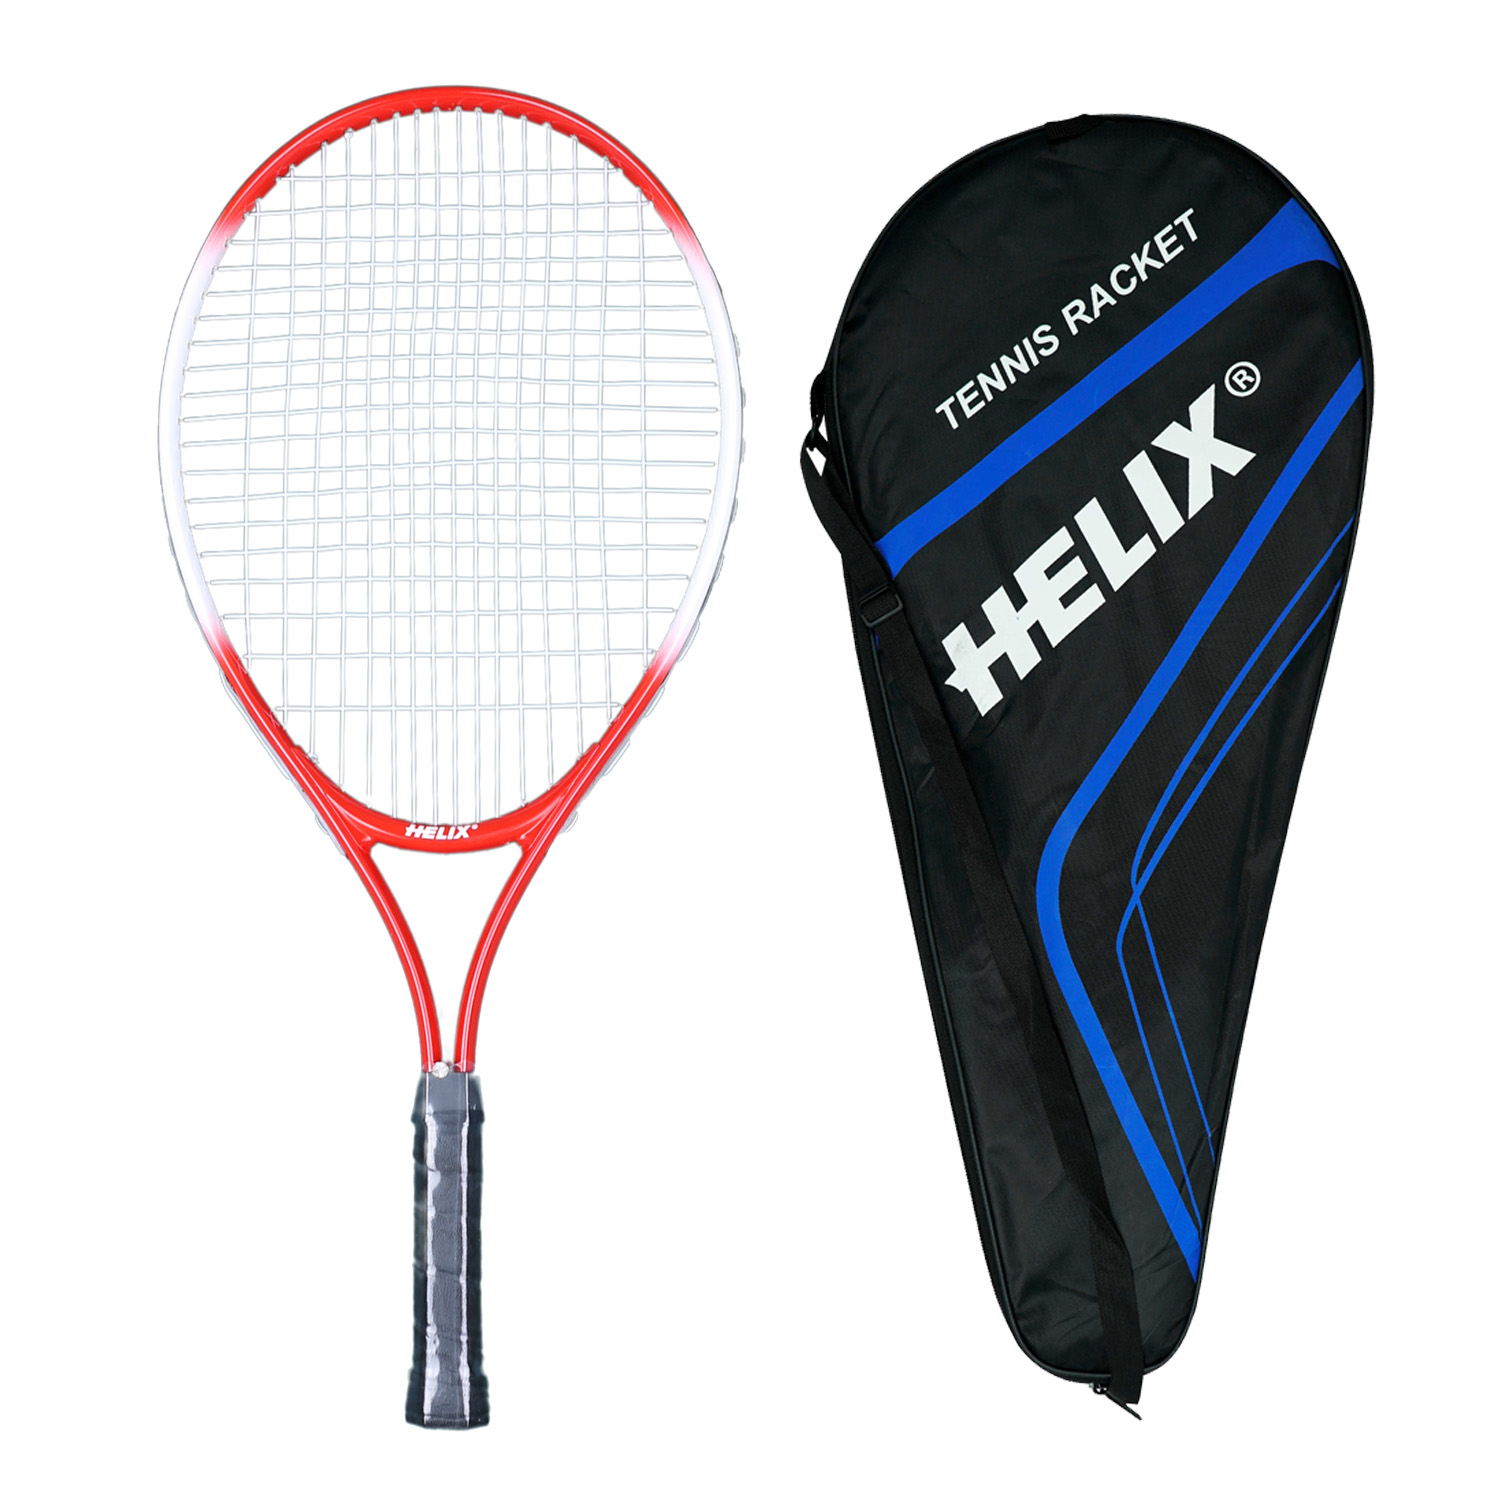 Helix Tenis Raketi 23"